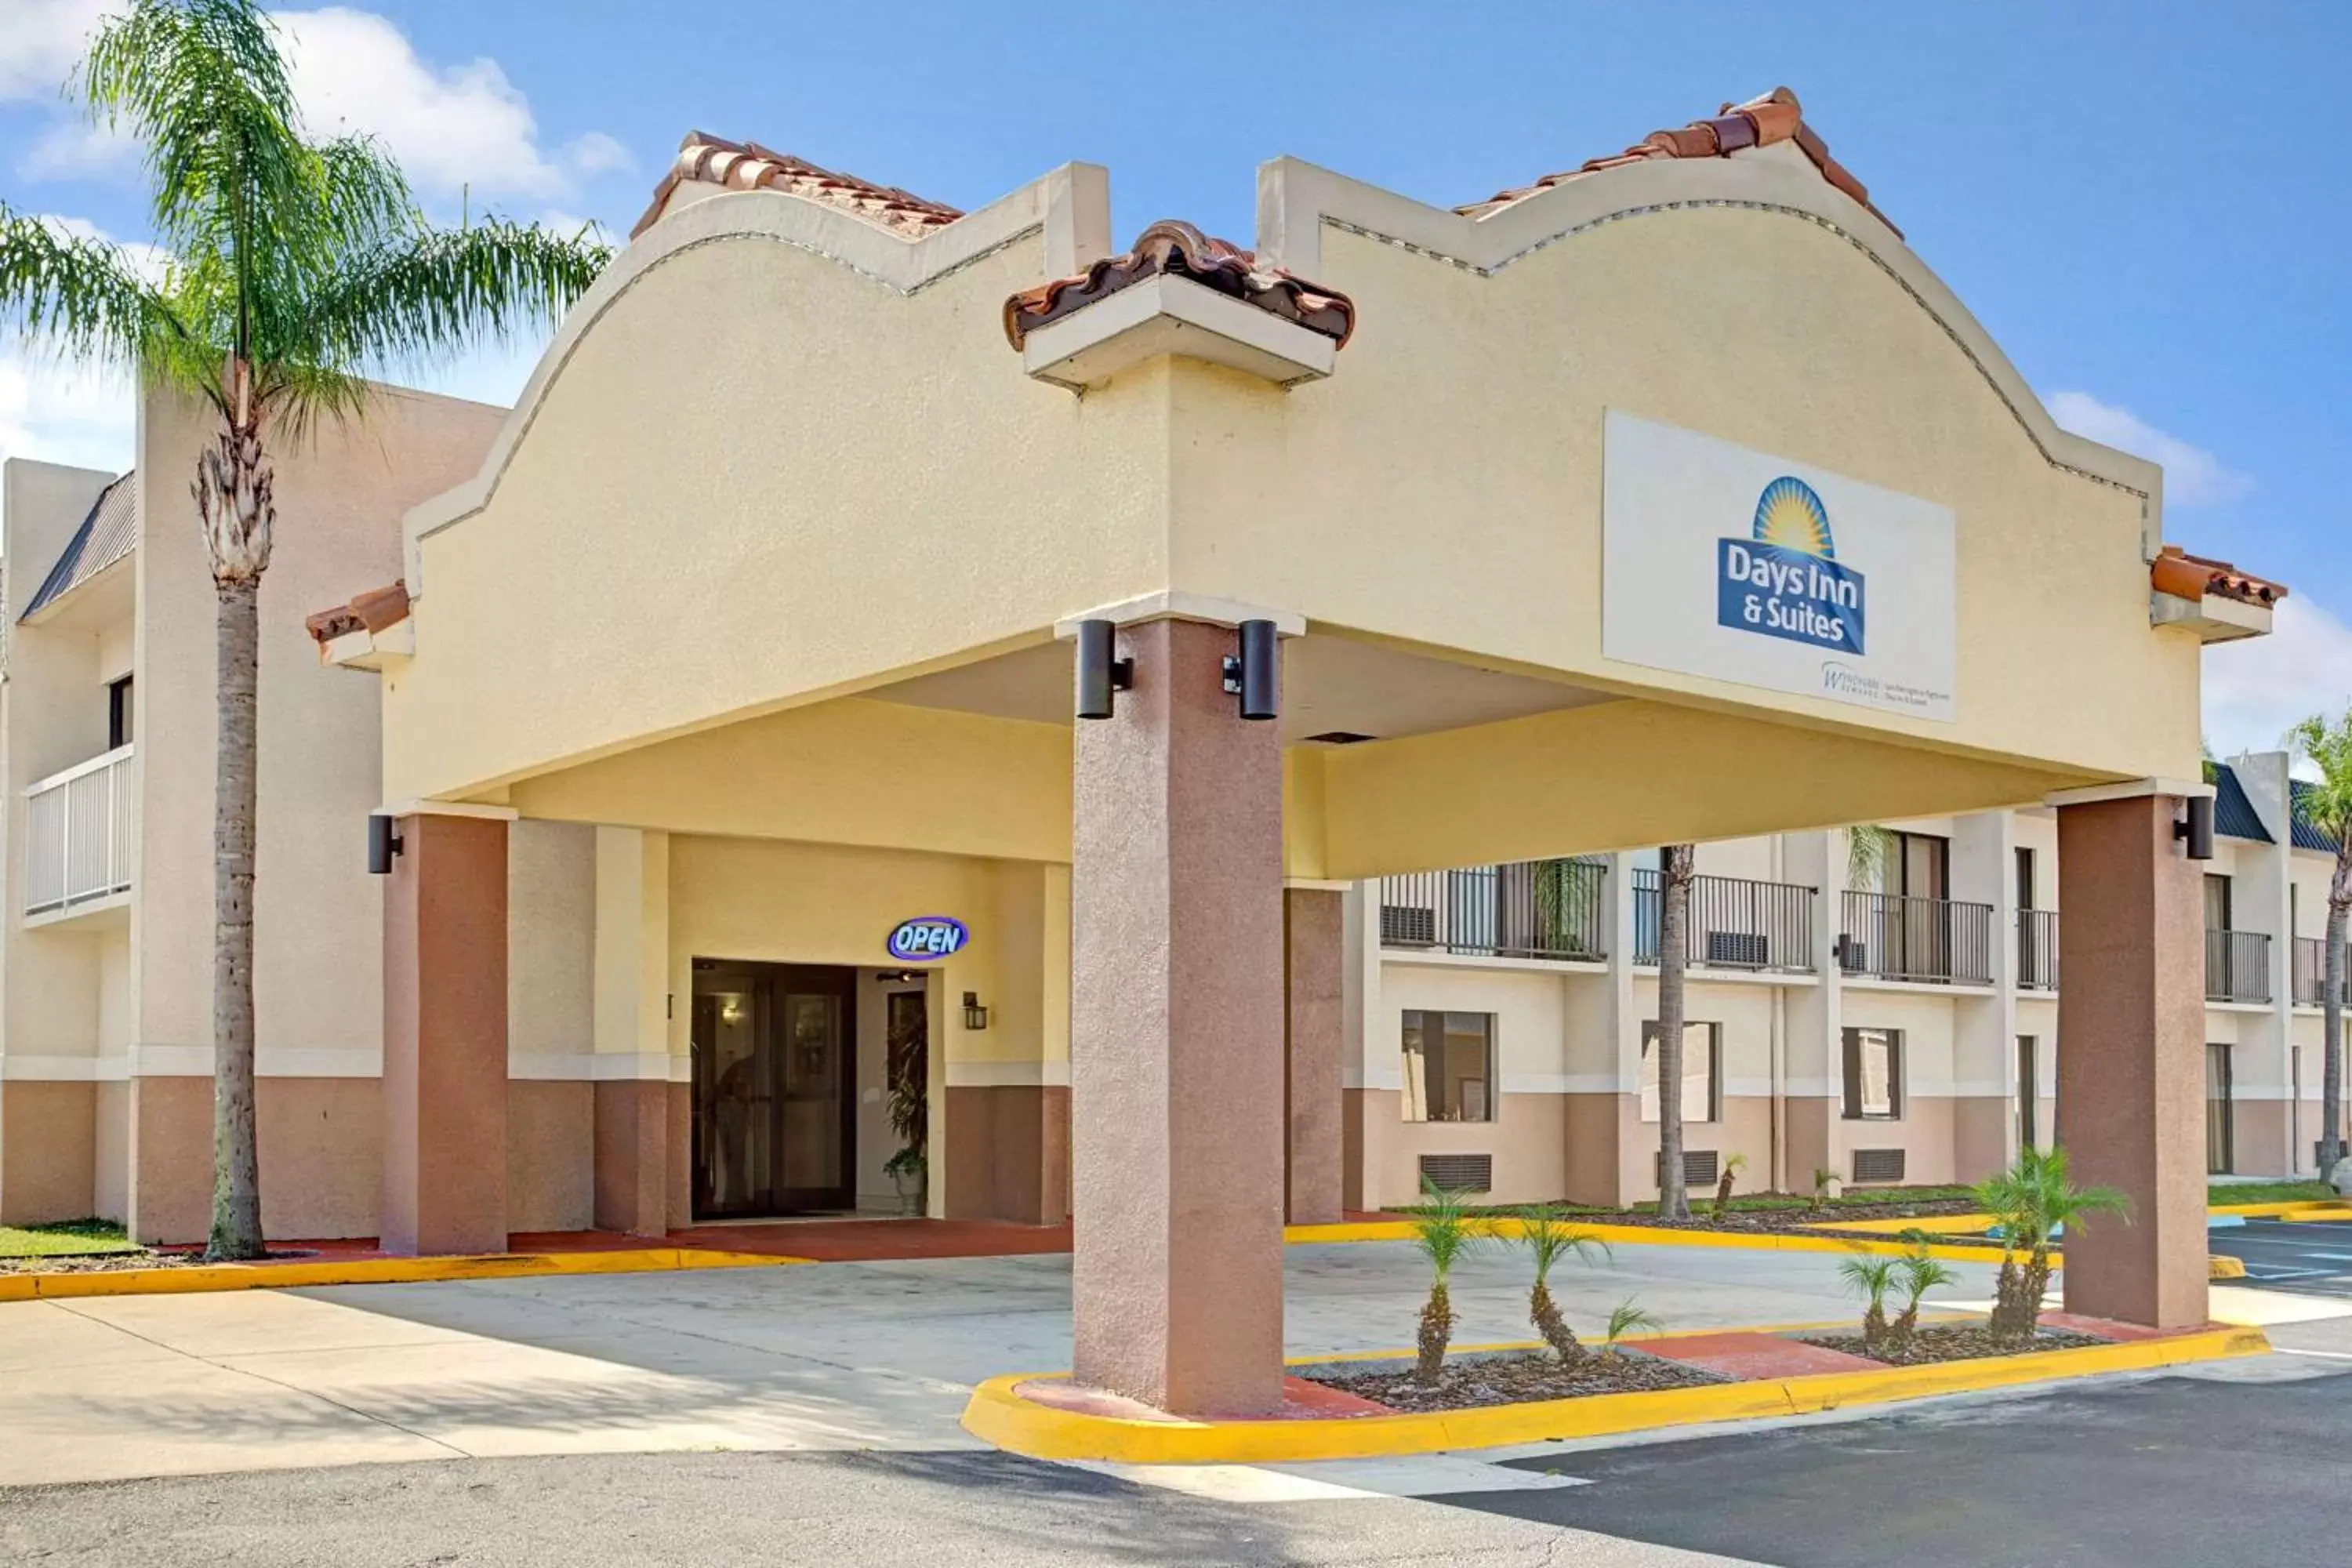 Property Building in Days Inn & Suites by Wyndham Tampa near Ybor City